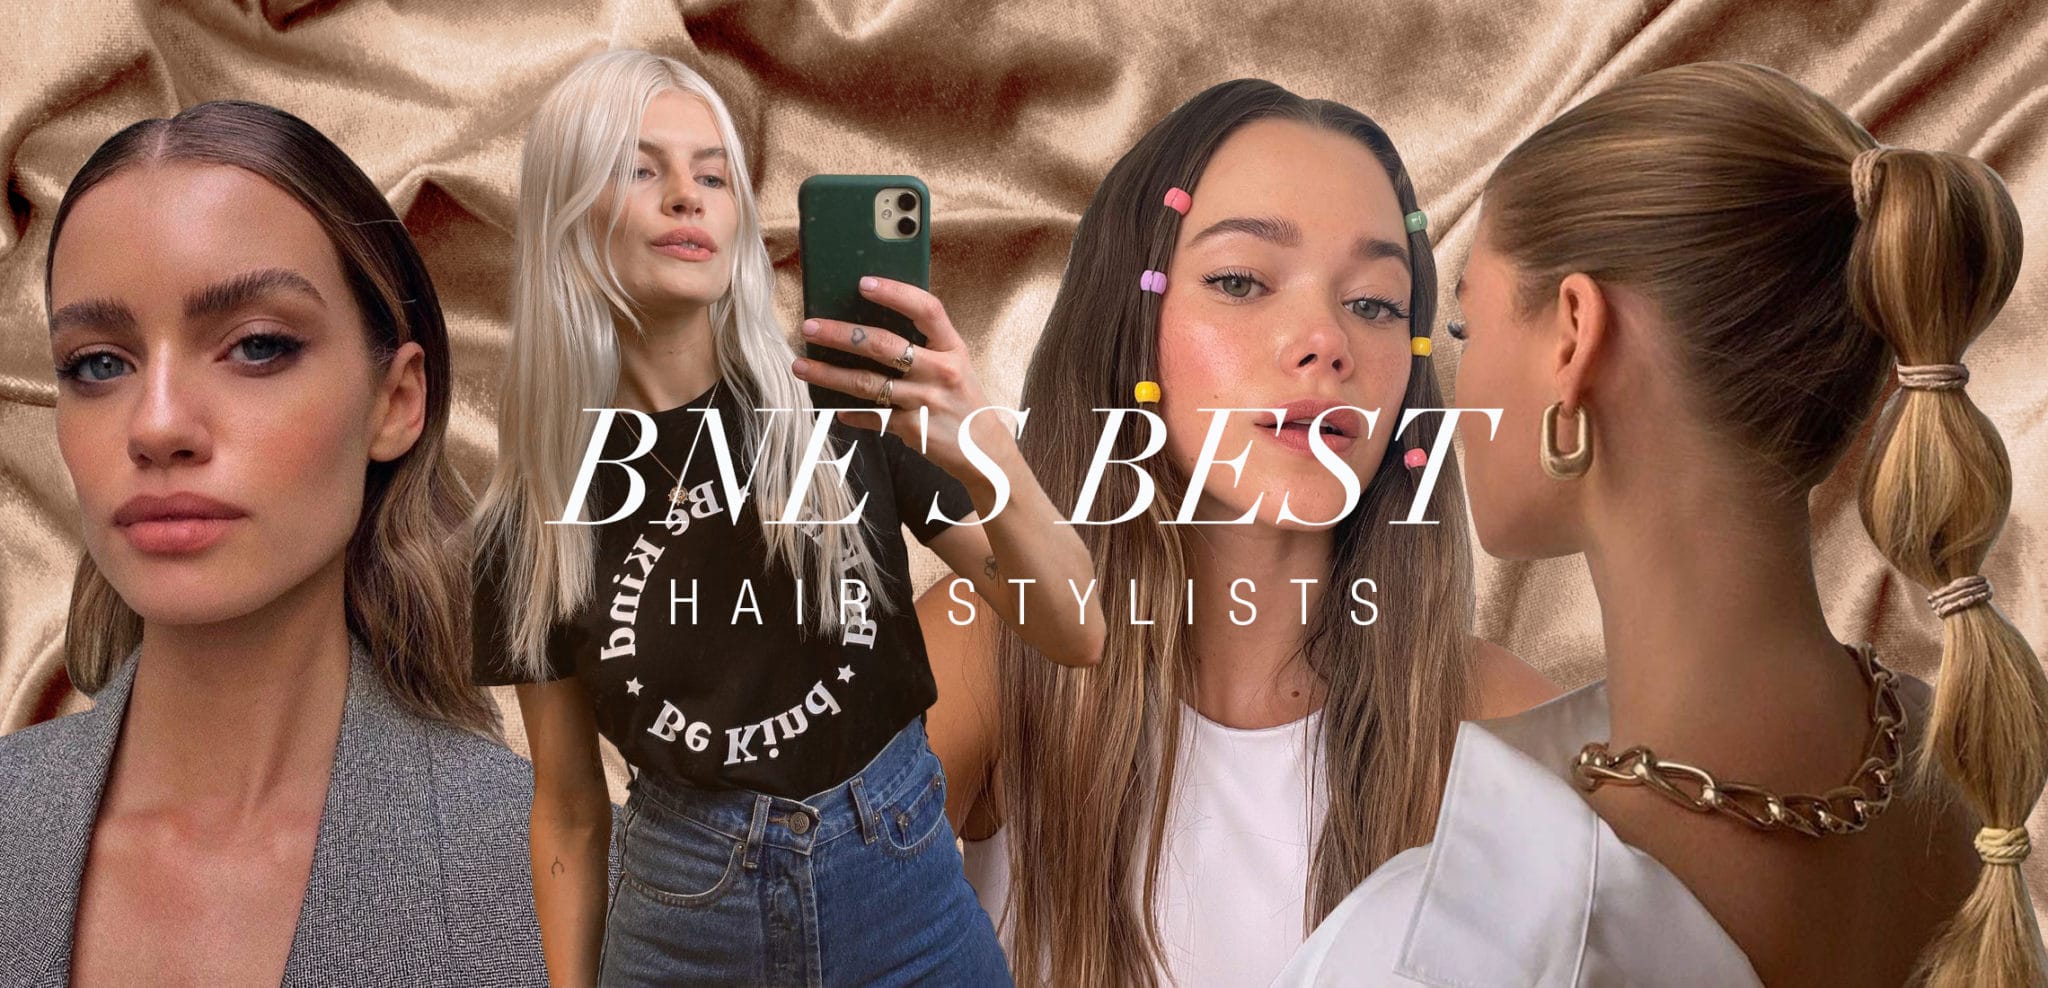 Brisbane's Best Hair Stylists